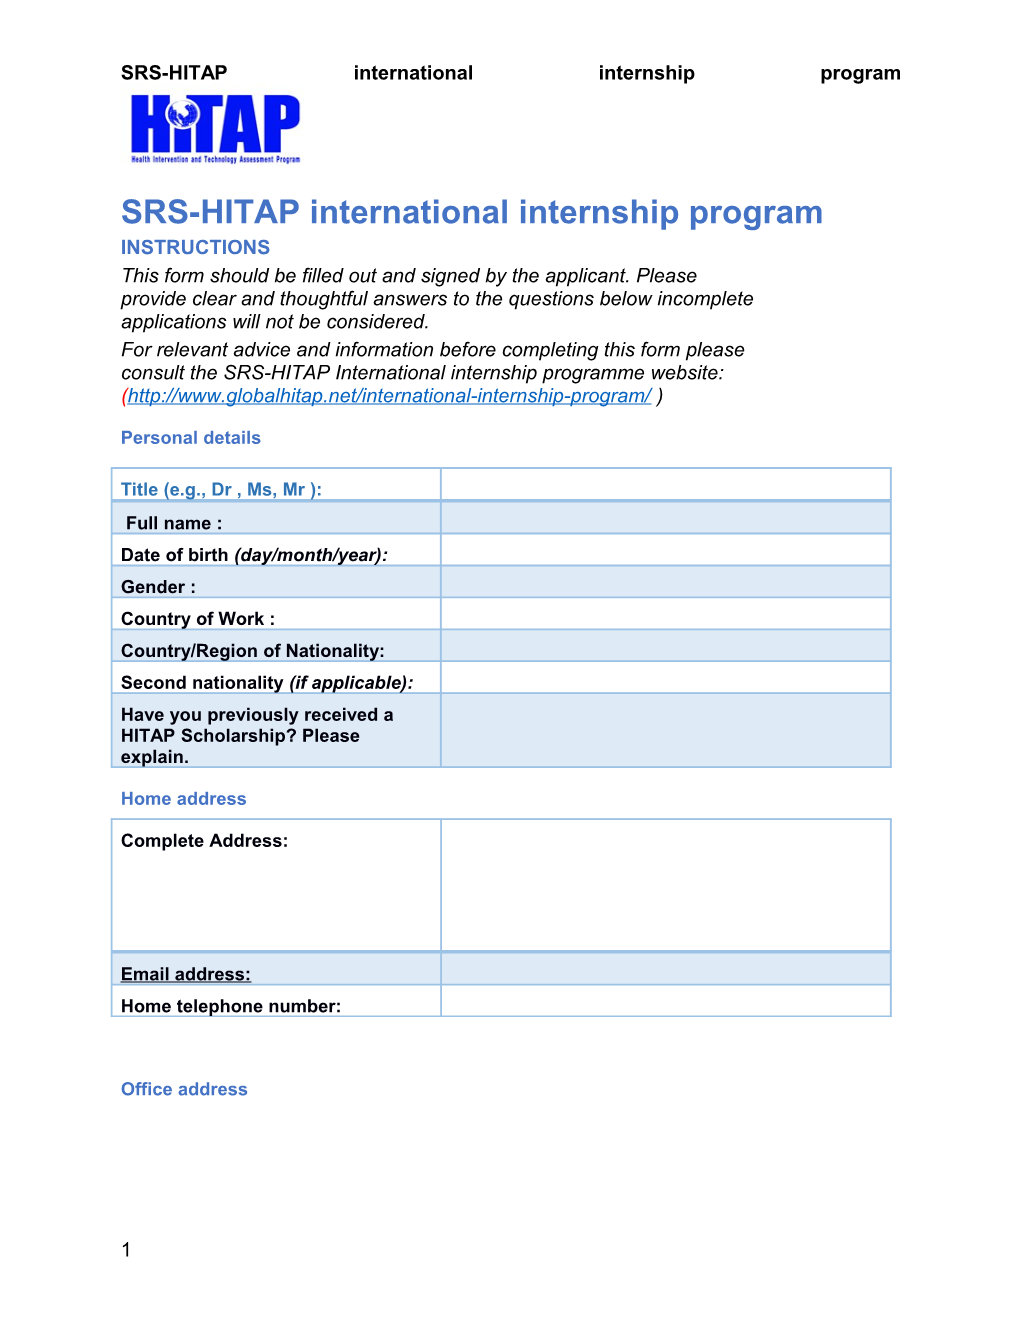 SRS-HITAP International Internship Program